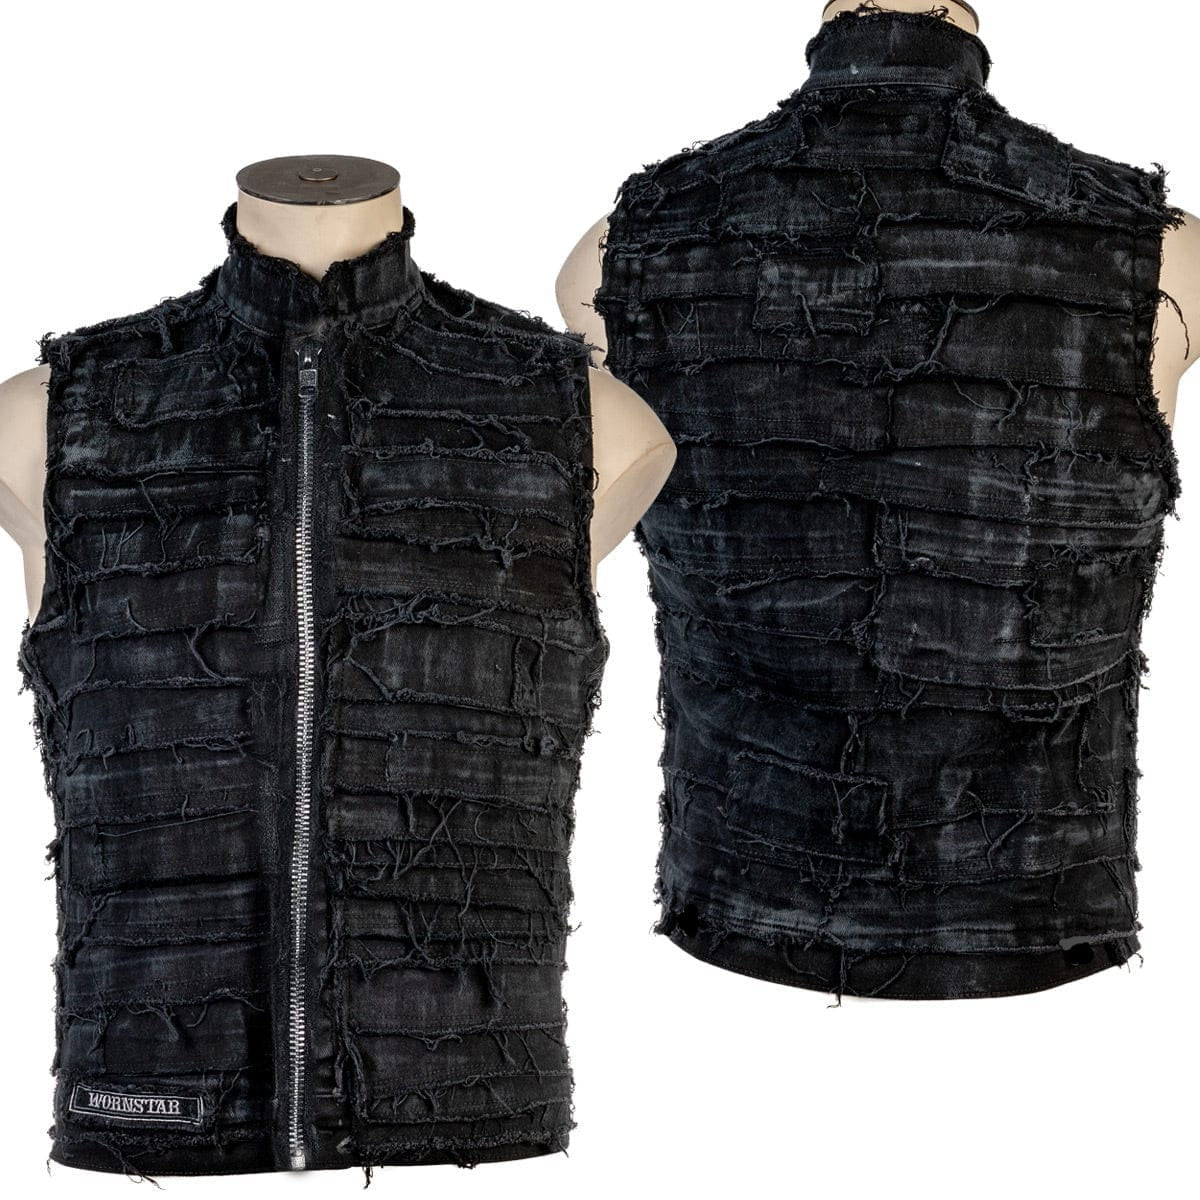 Custom Chop Shop Jacket Wornstar Custom Handmade - Vest - Scars and Stripes - Link